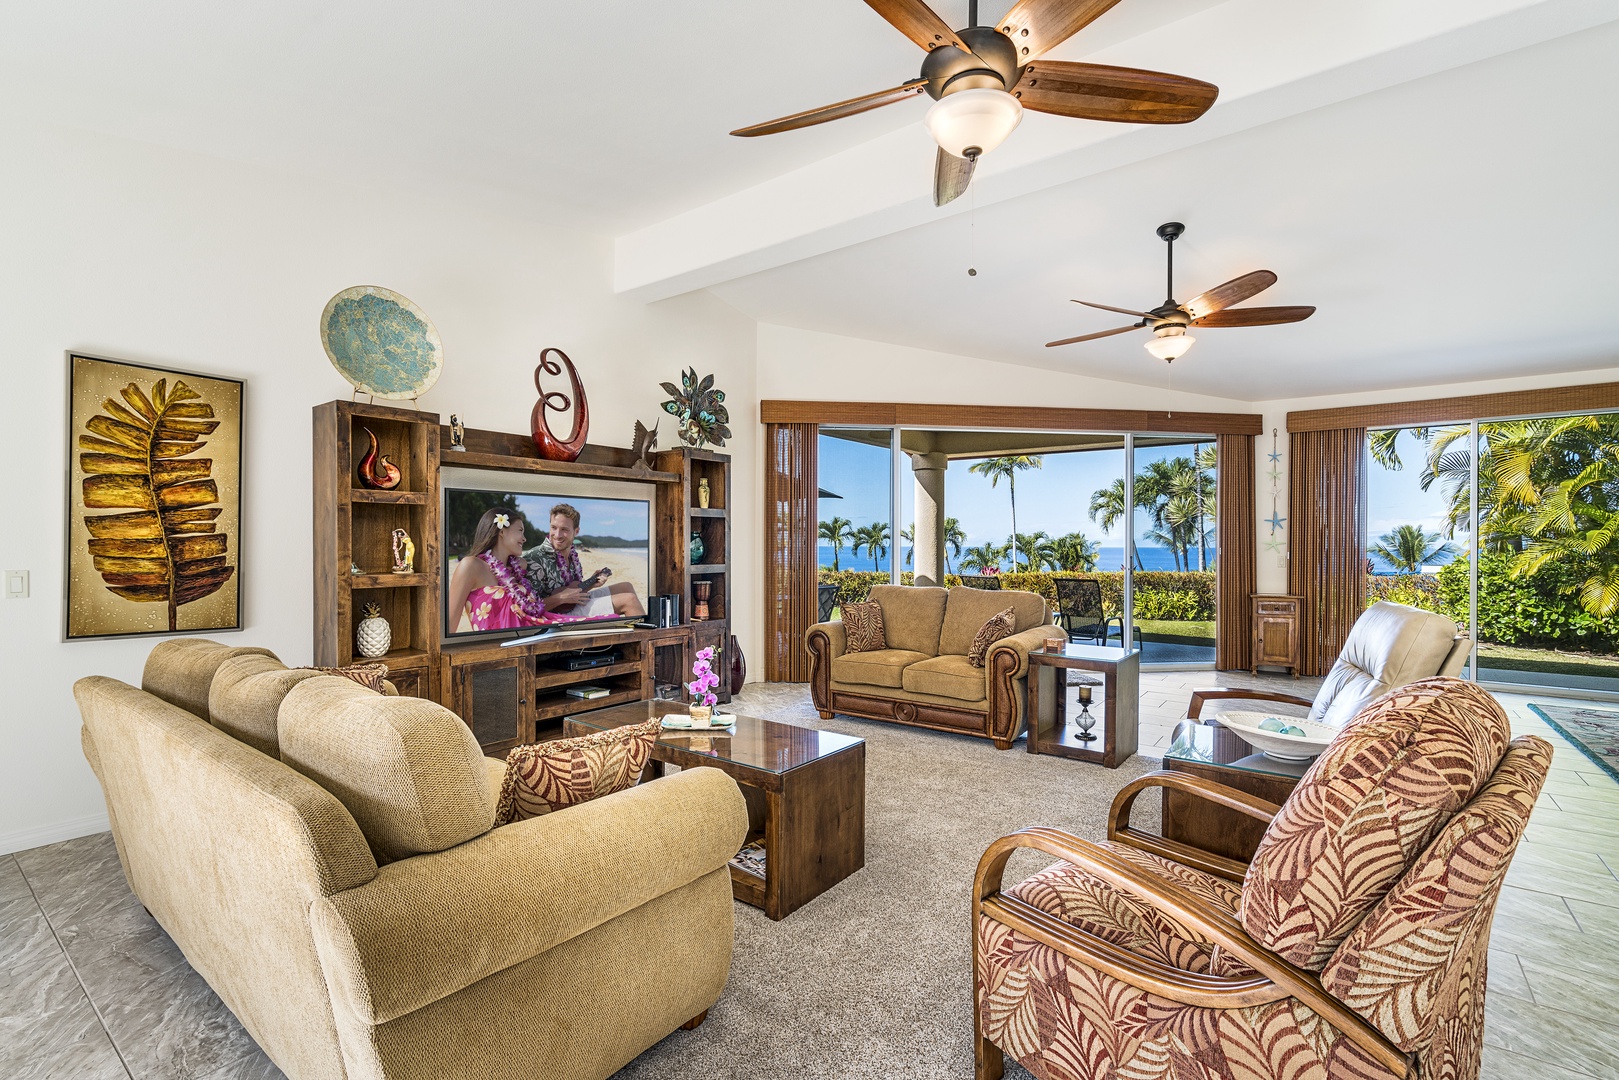 Kailua Kona Vacation Rentals, Maile Hale - Take you pick between watching the TV or the beautiful coastline